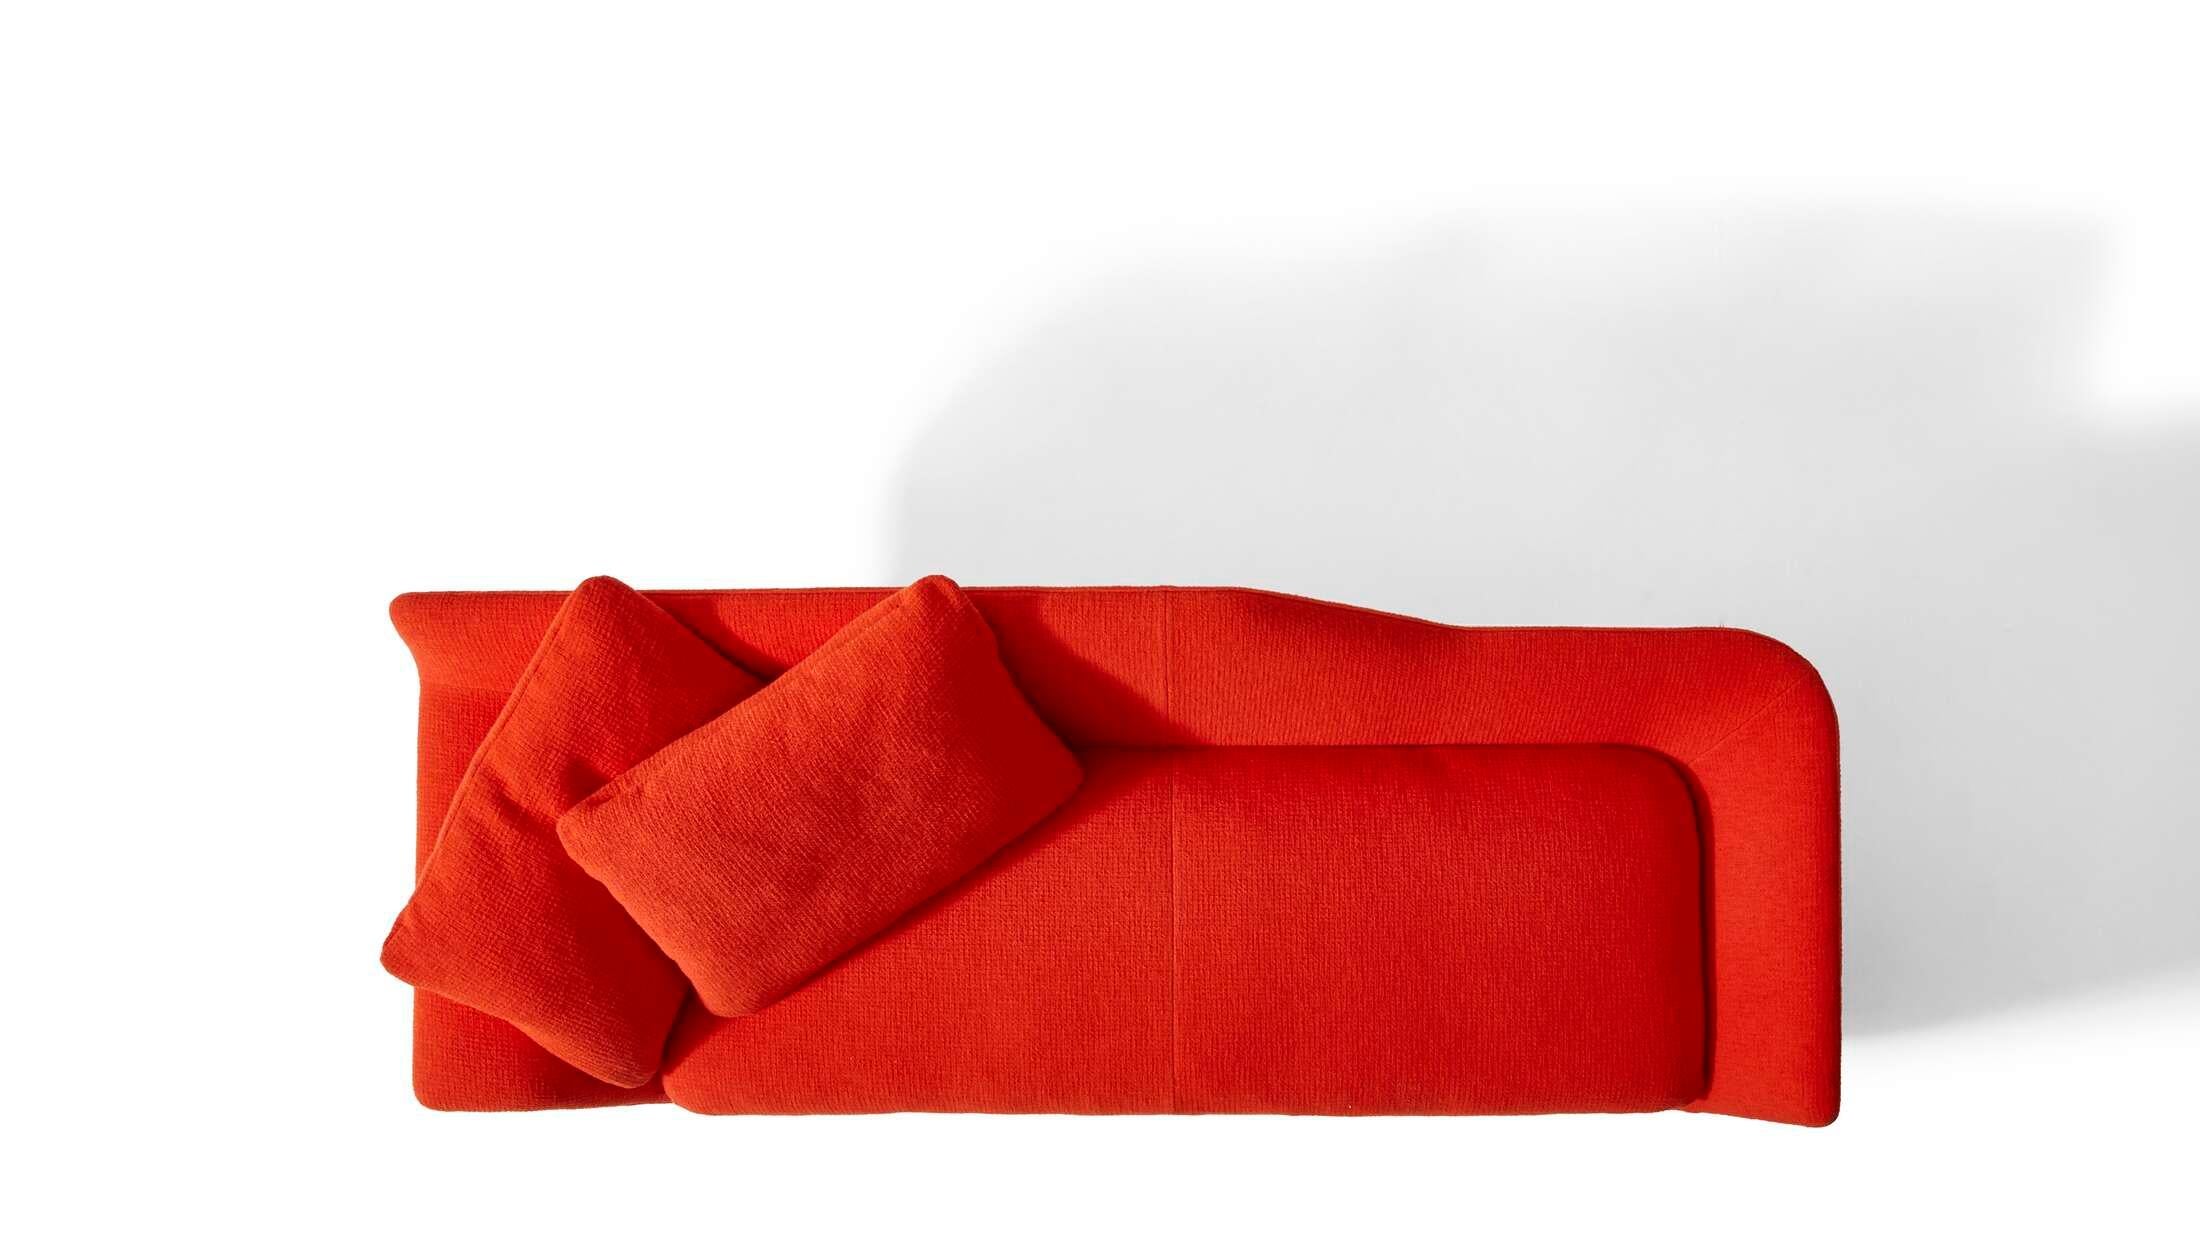 Fabric Antonio Citterio Esosoft Sofa by Cassina in red, magenta or white  For Sale